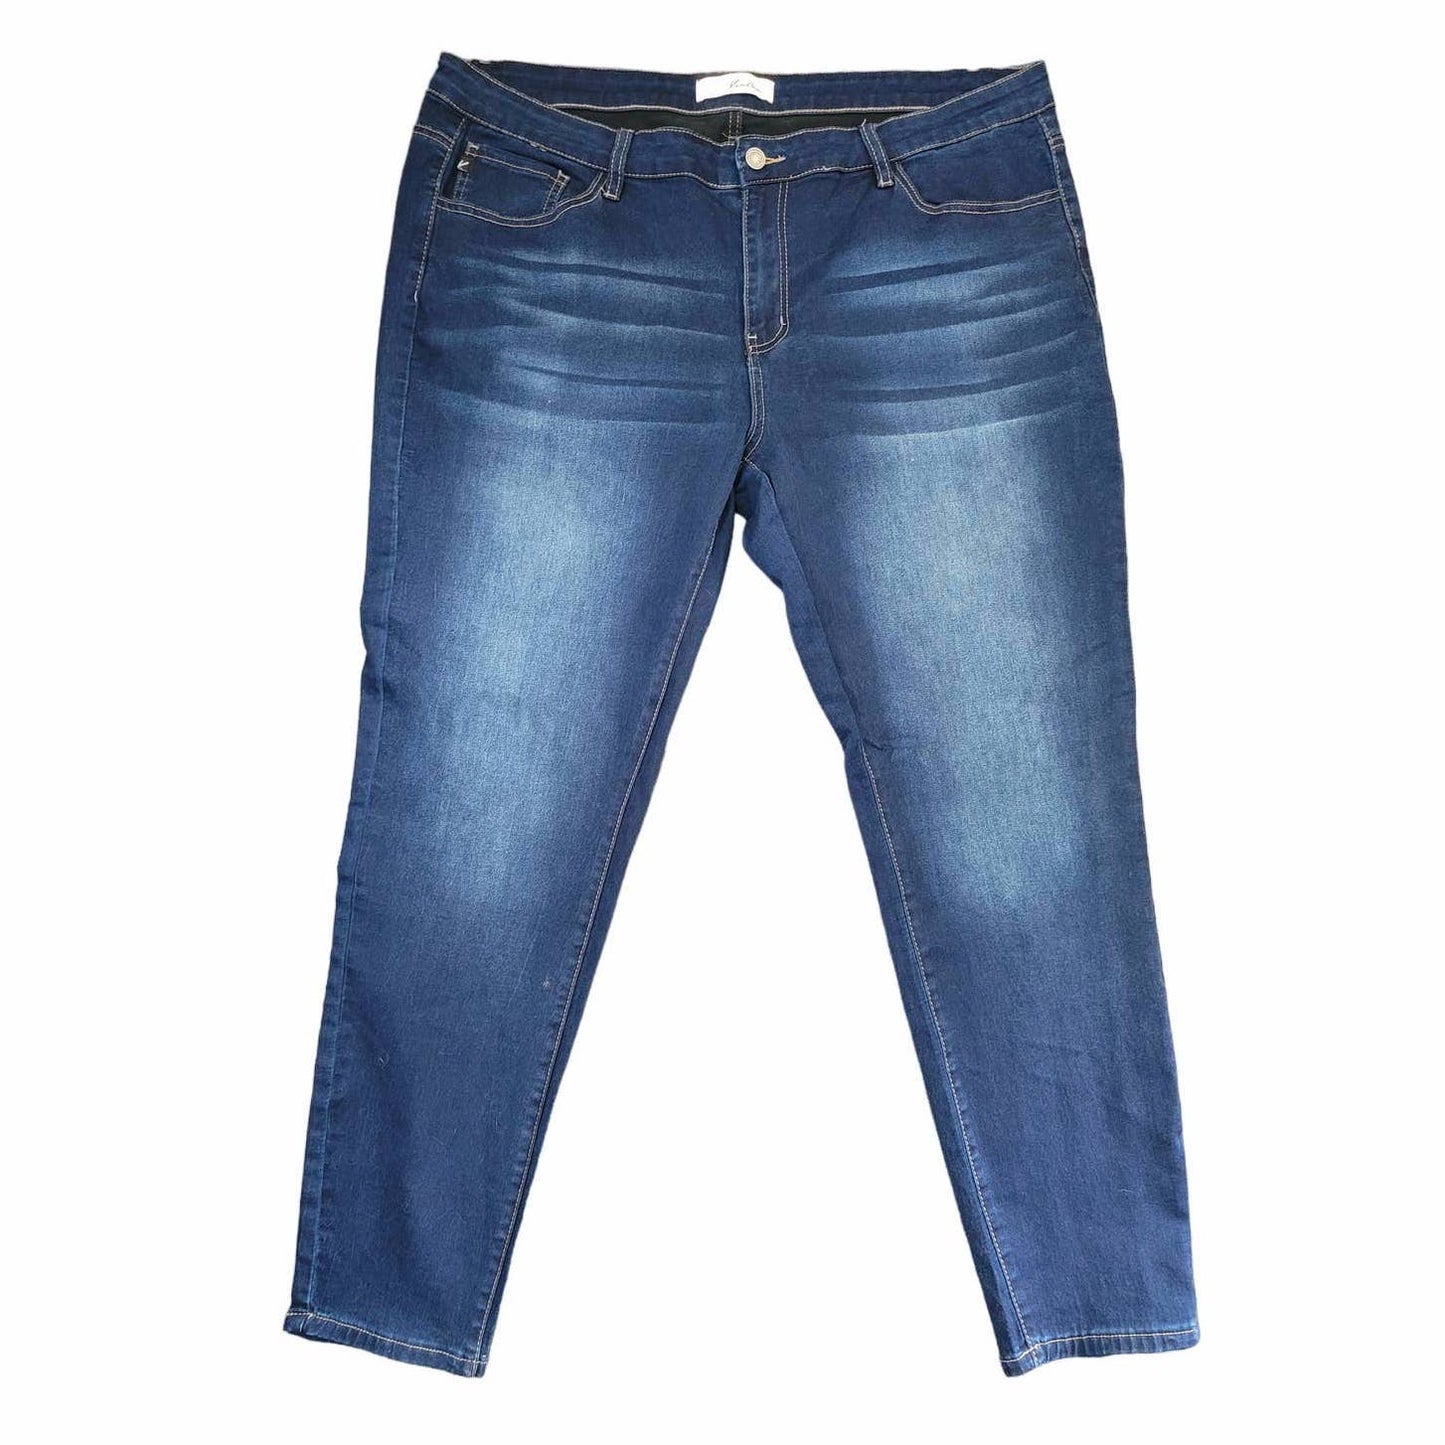 Kancan Dark Wash Mid Rise Skinny Jeans Plus Size 3XL